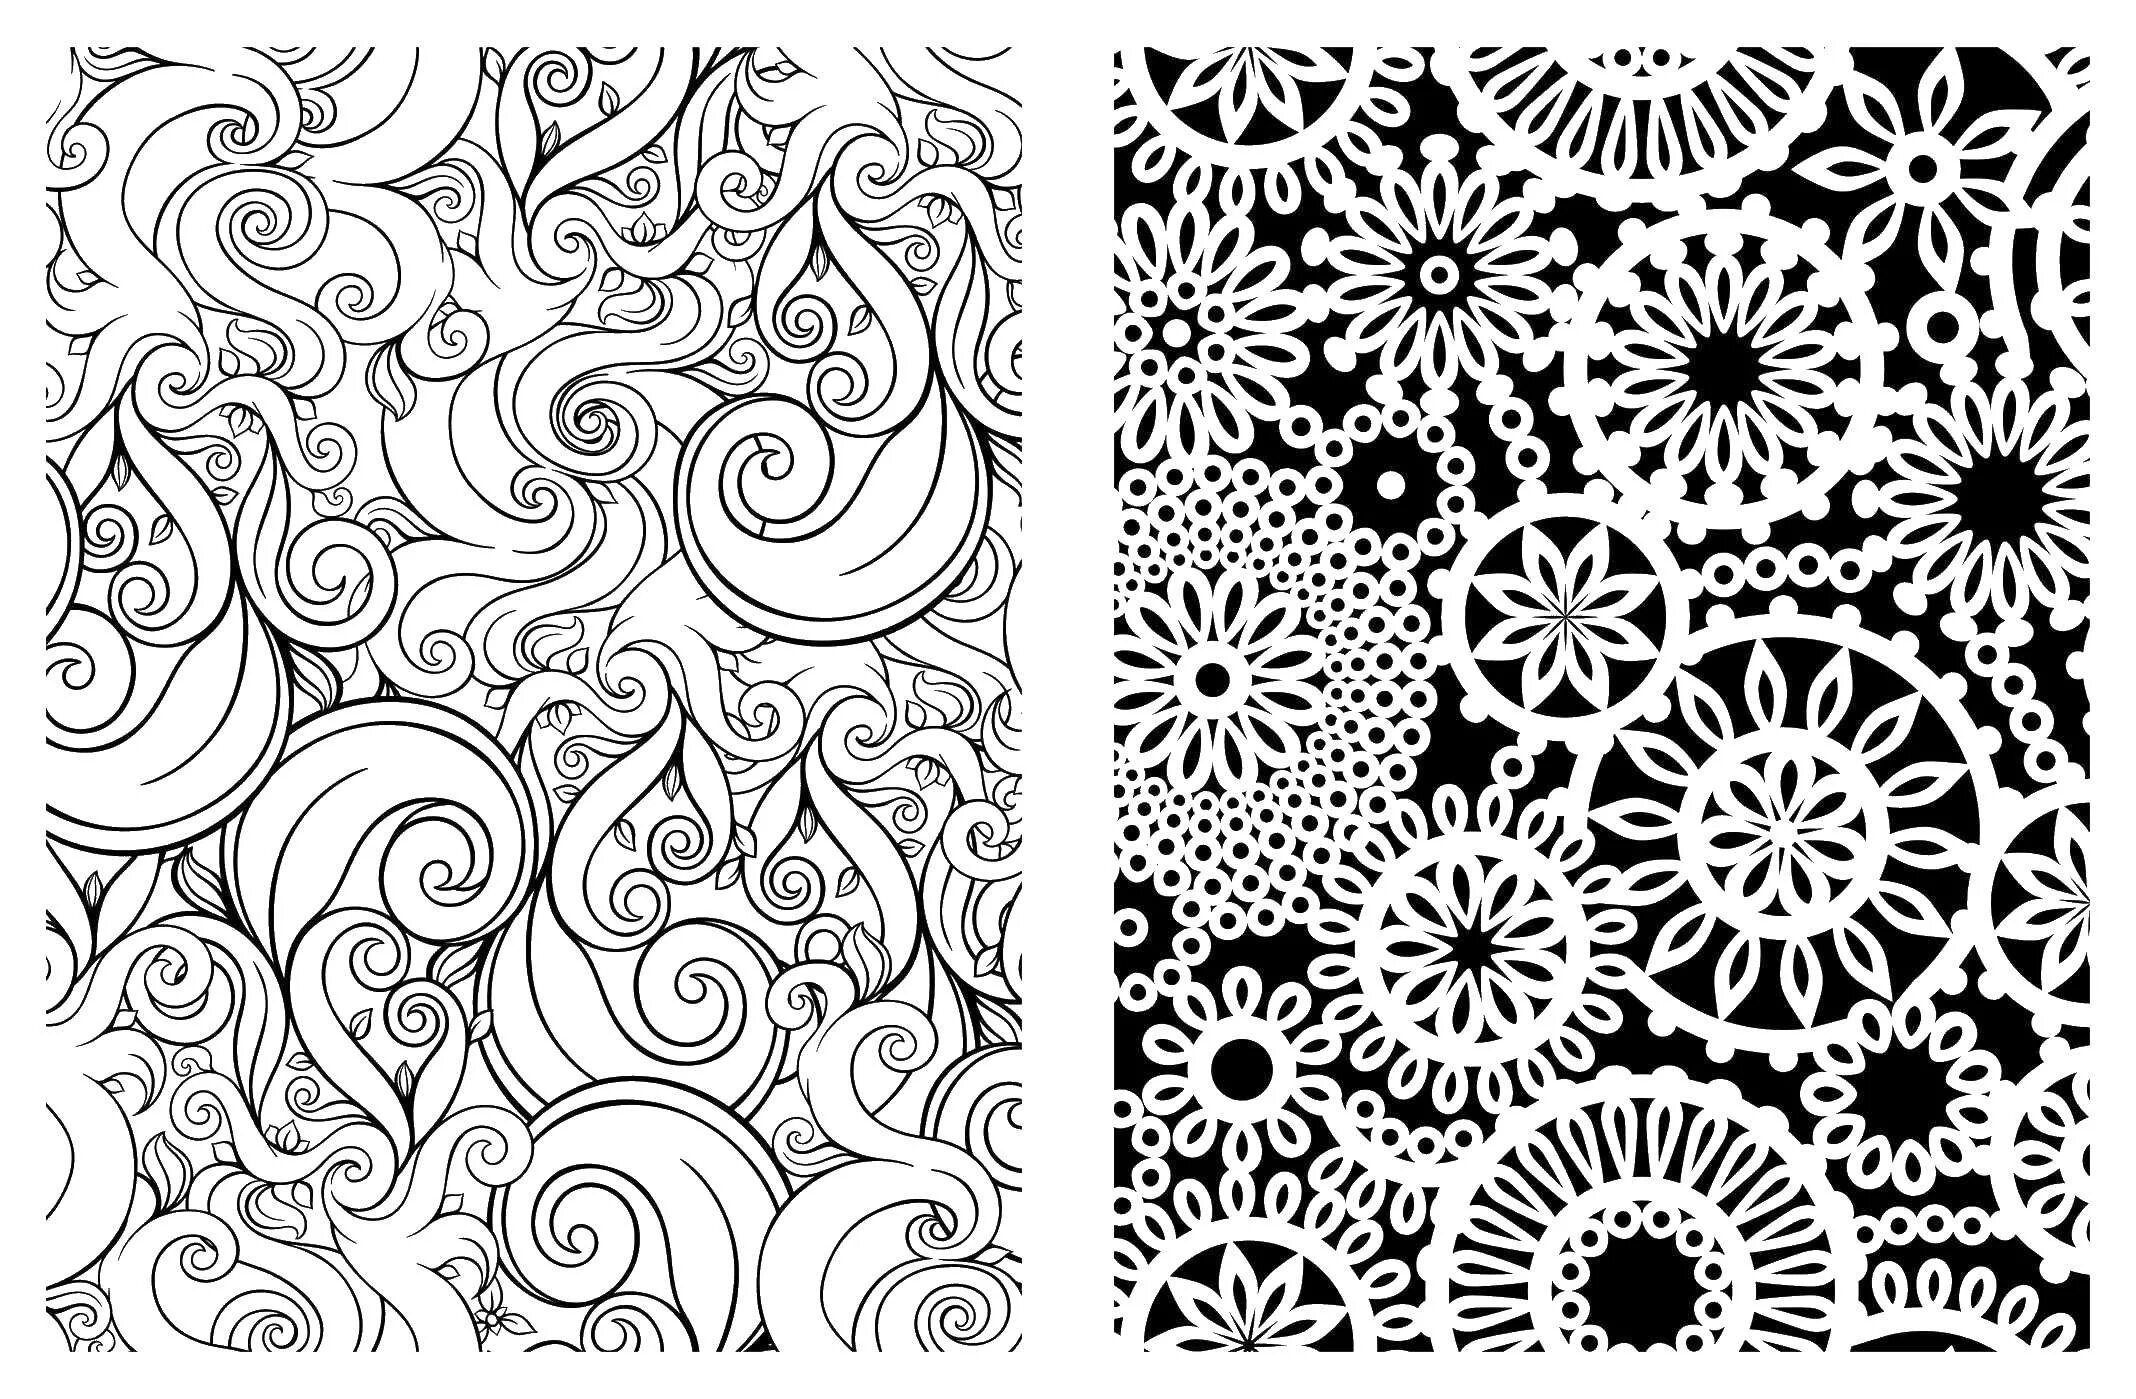 Patterns #2